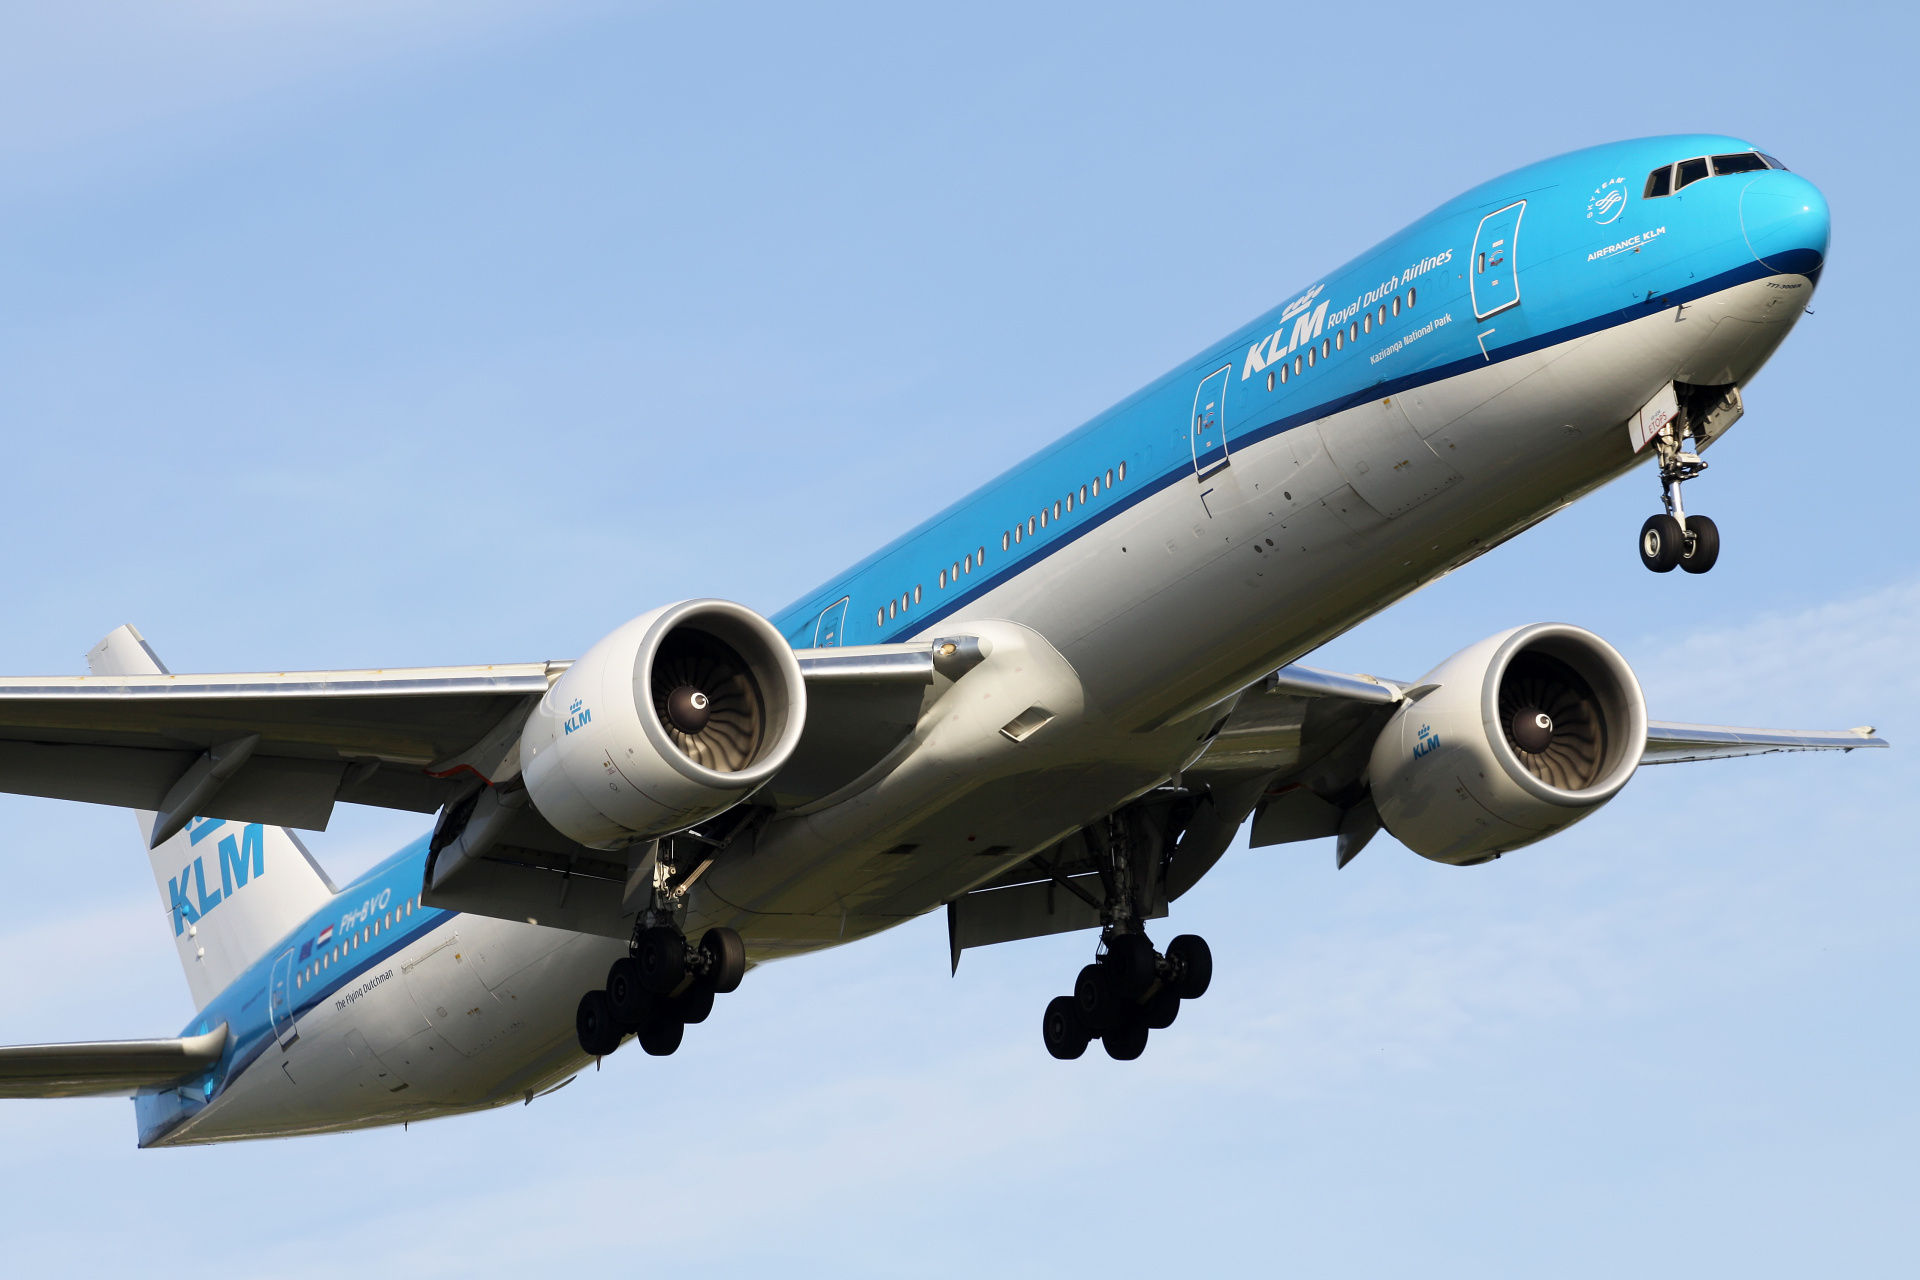 PH-BVO (Aircraft » Schiphol Spotting » Boeing 777-300ER » KLM Royal Dutch Airlines)